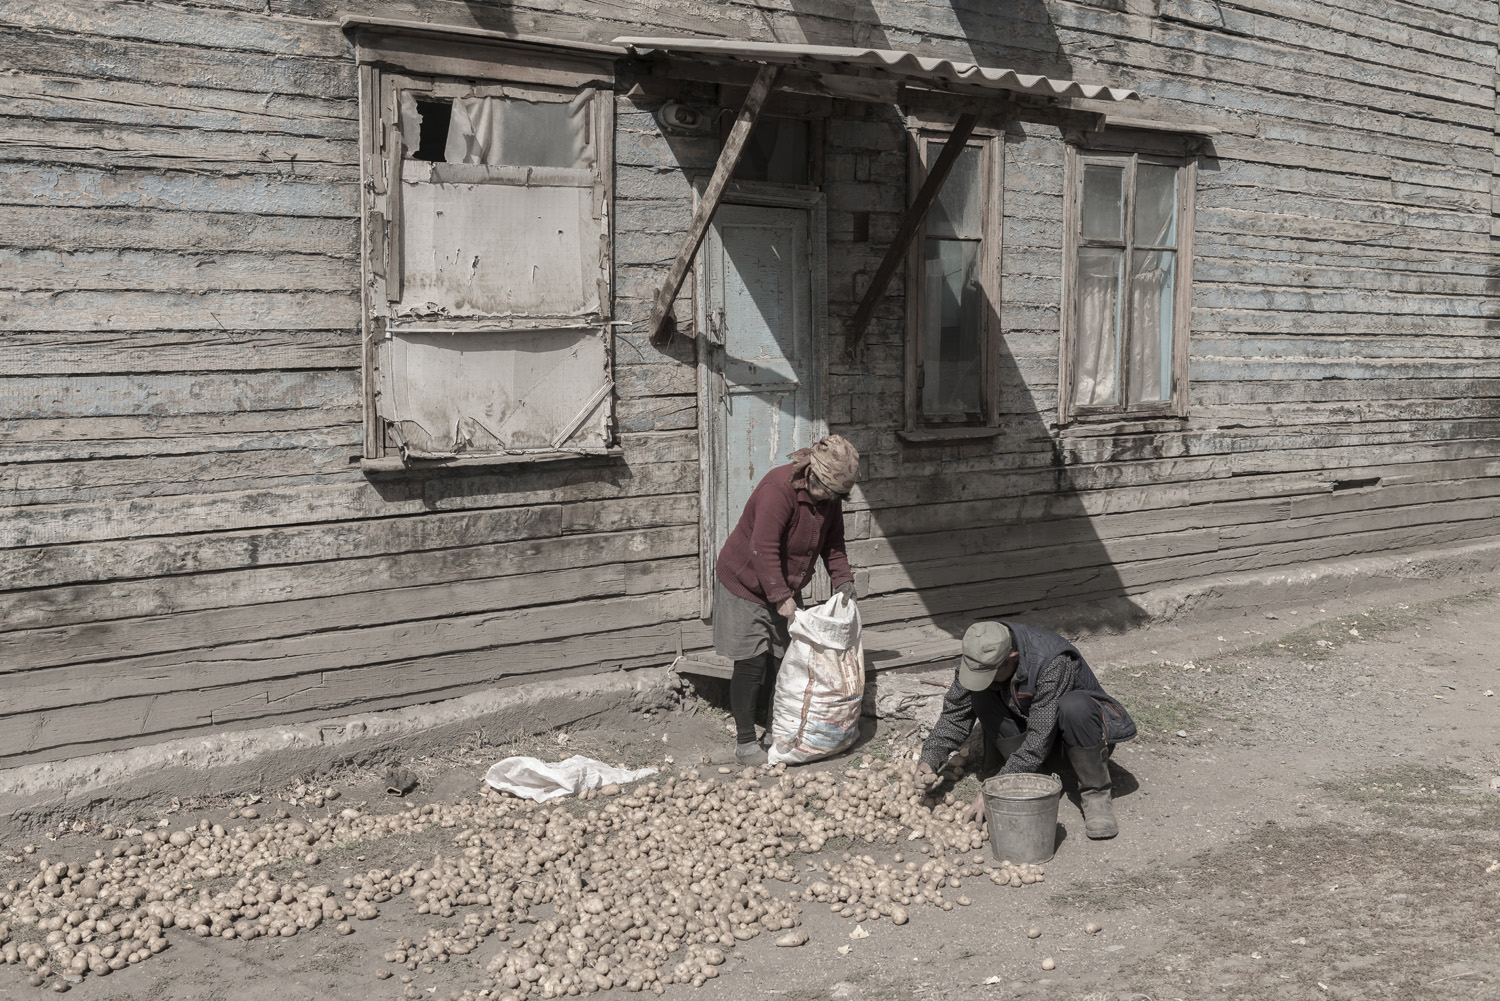 min-kush-soviet-uranium-mining-town-industrial-Russia-Kyrgyzstan-ruins-soviet-sign-jo-kearney-photos-video-photography.potatoes.jpg